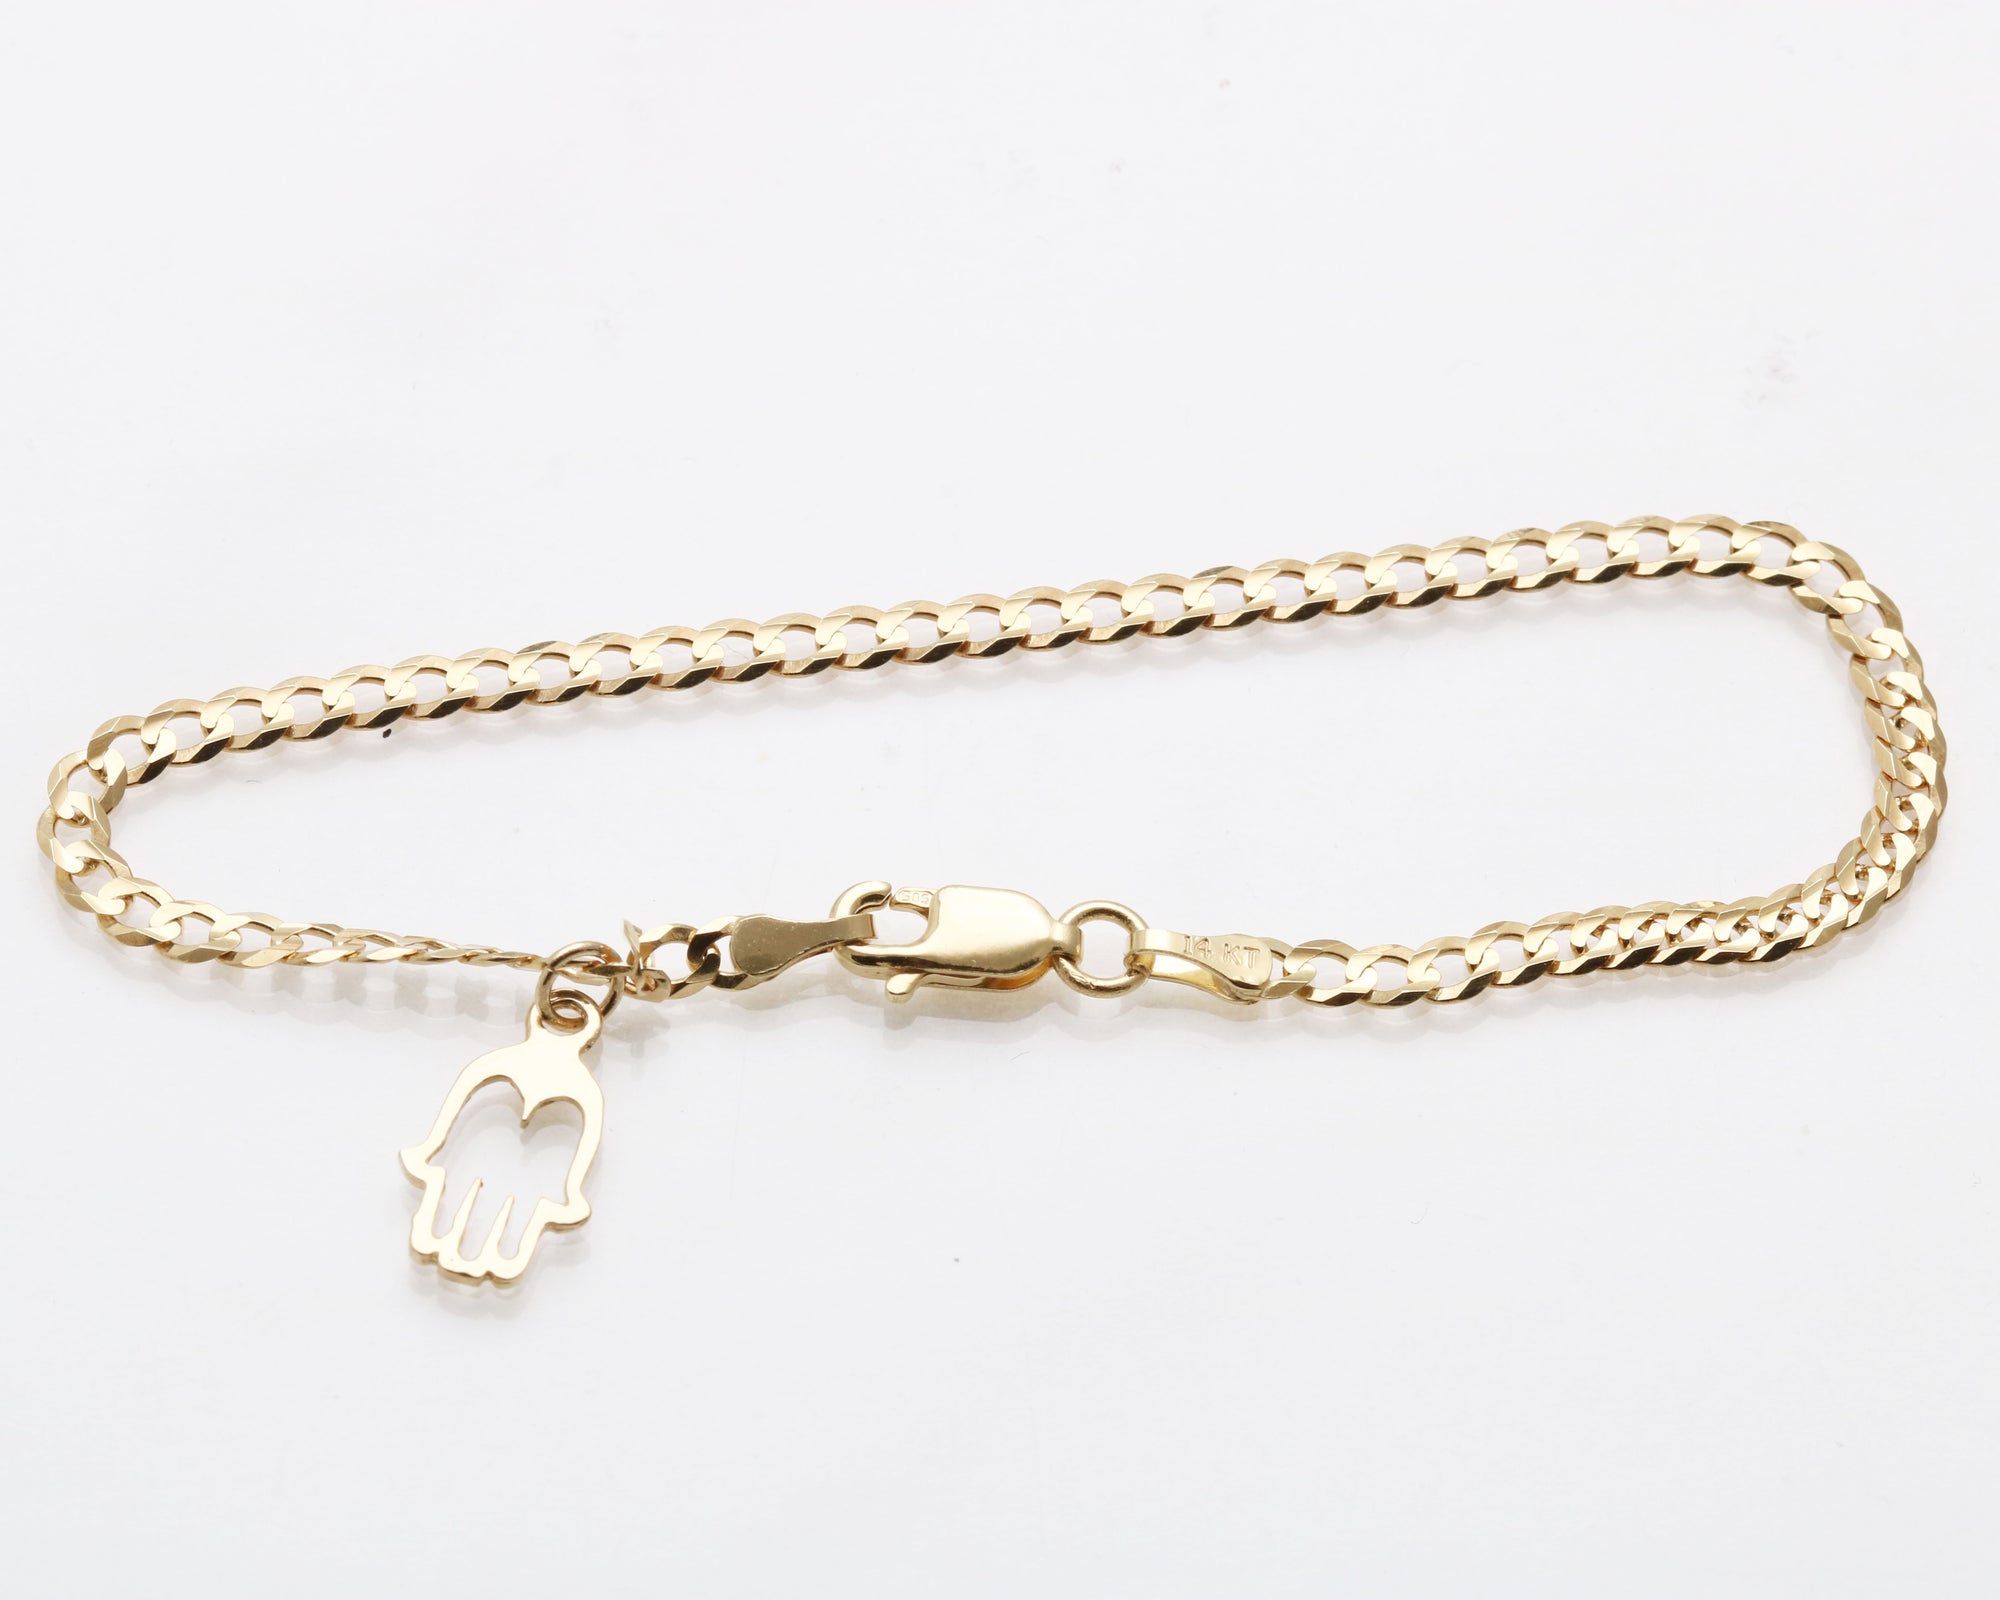 Amazoncom JULJEWELRY 14K Gold Filled Hamsa charm bracelet Hamsa Hand Of  God Gold or silver Bracelet 575 Chain Bracelets for Women  Handmade  Products